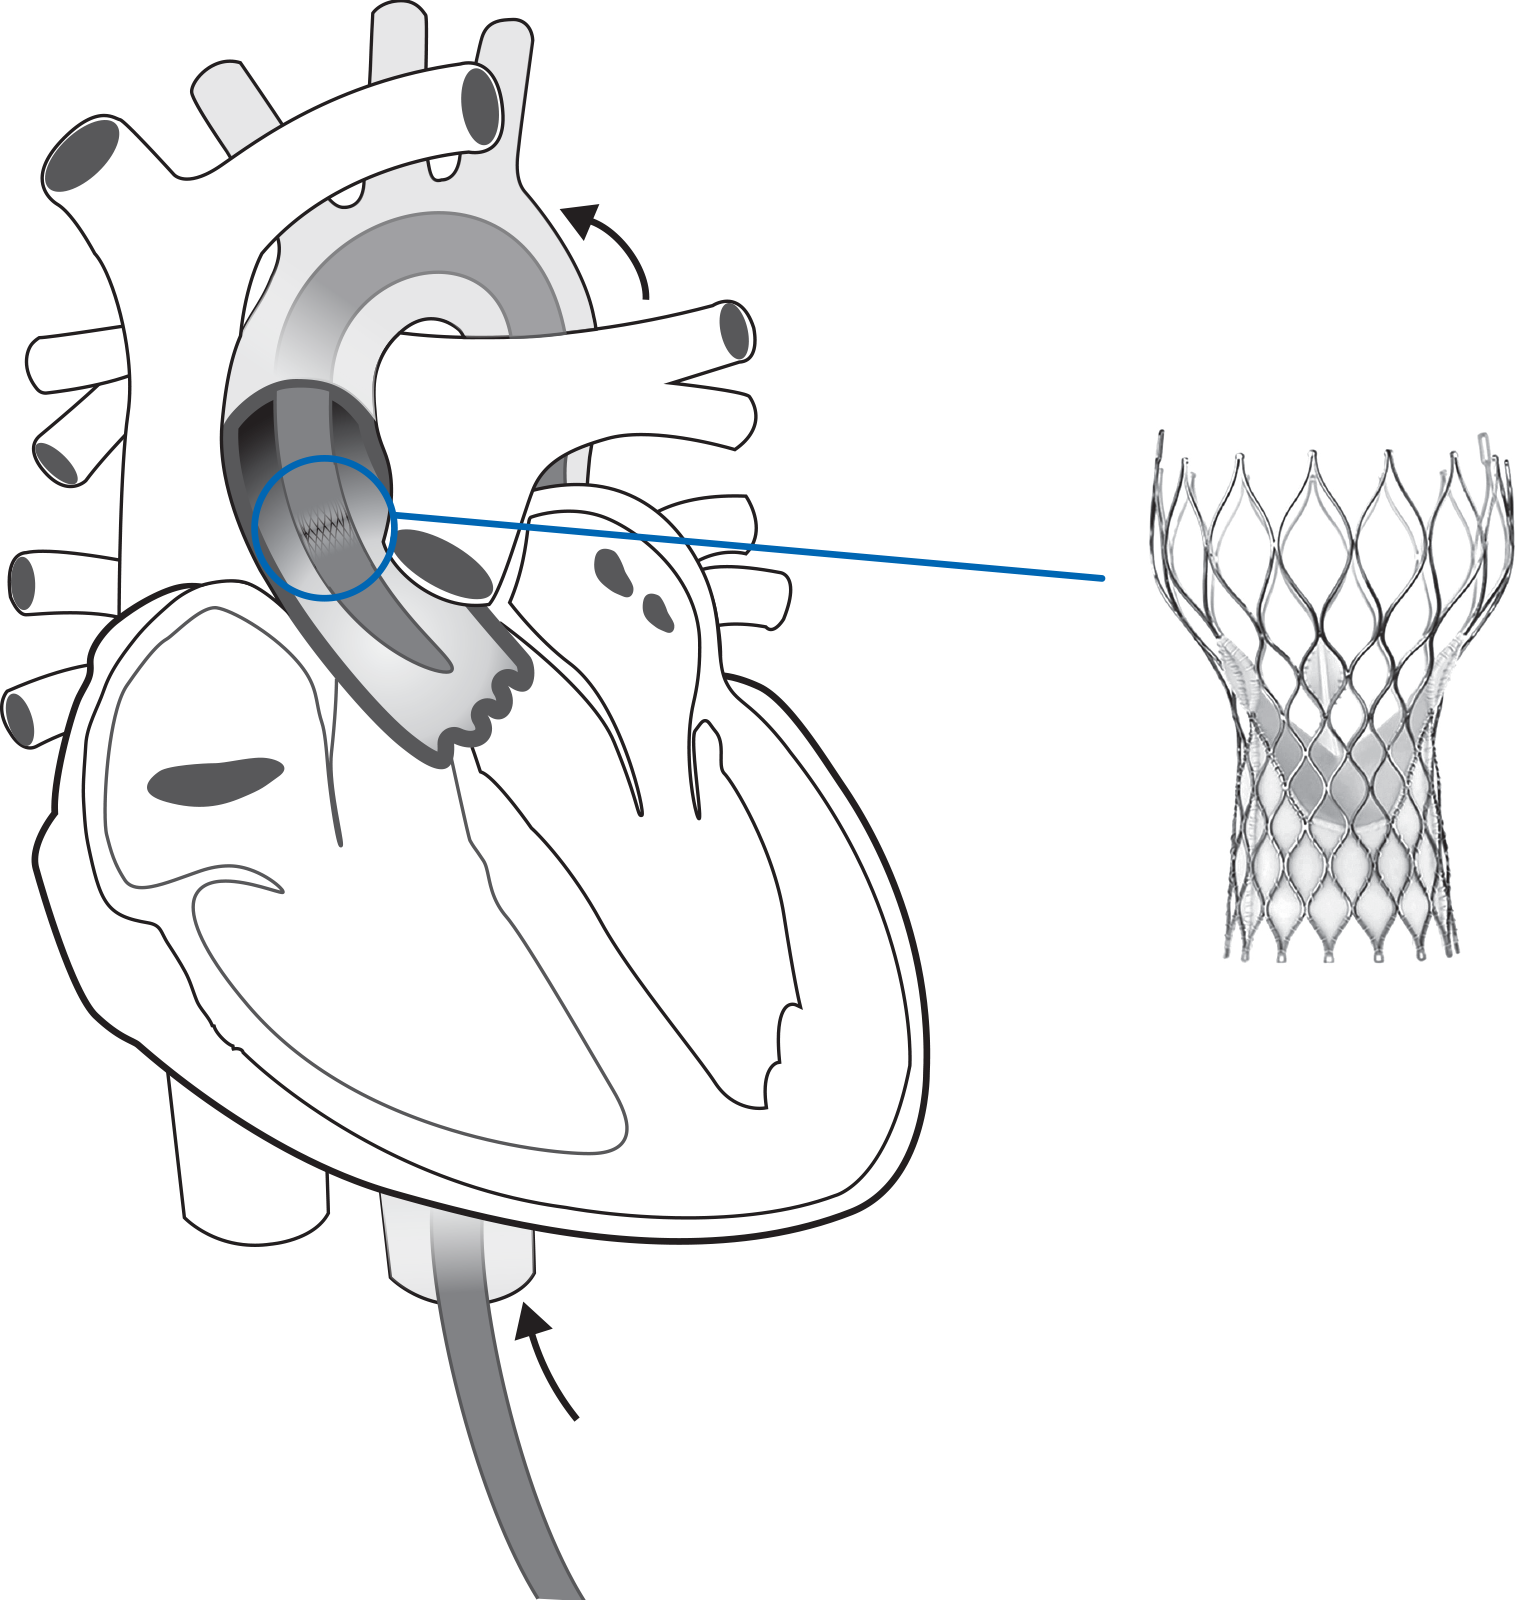 Transcatheter Aortic Valve Implantation.